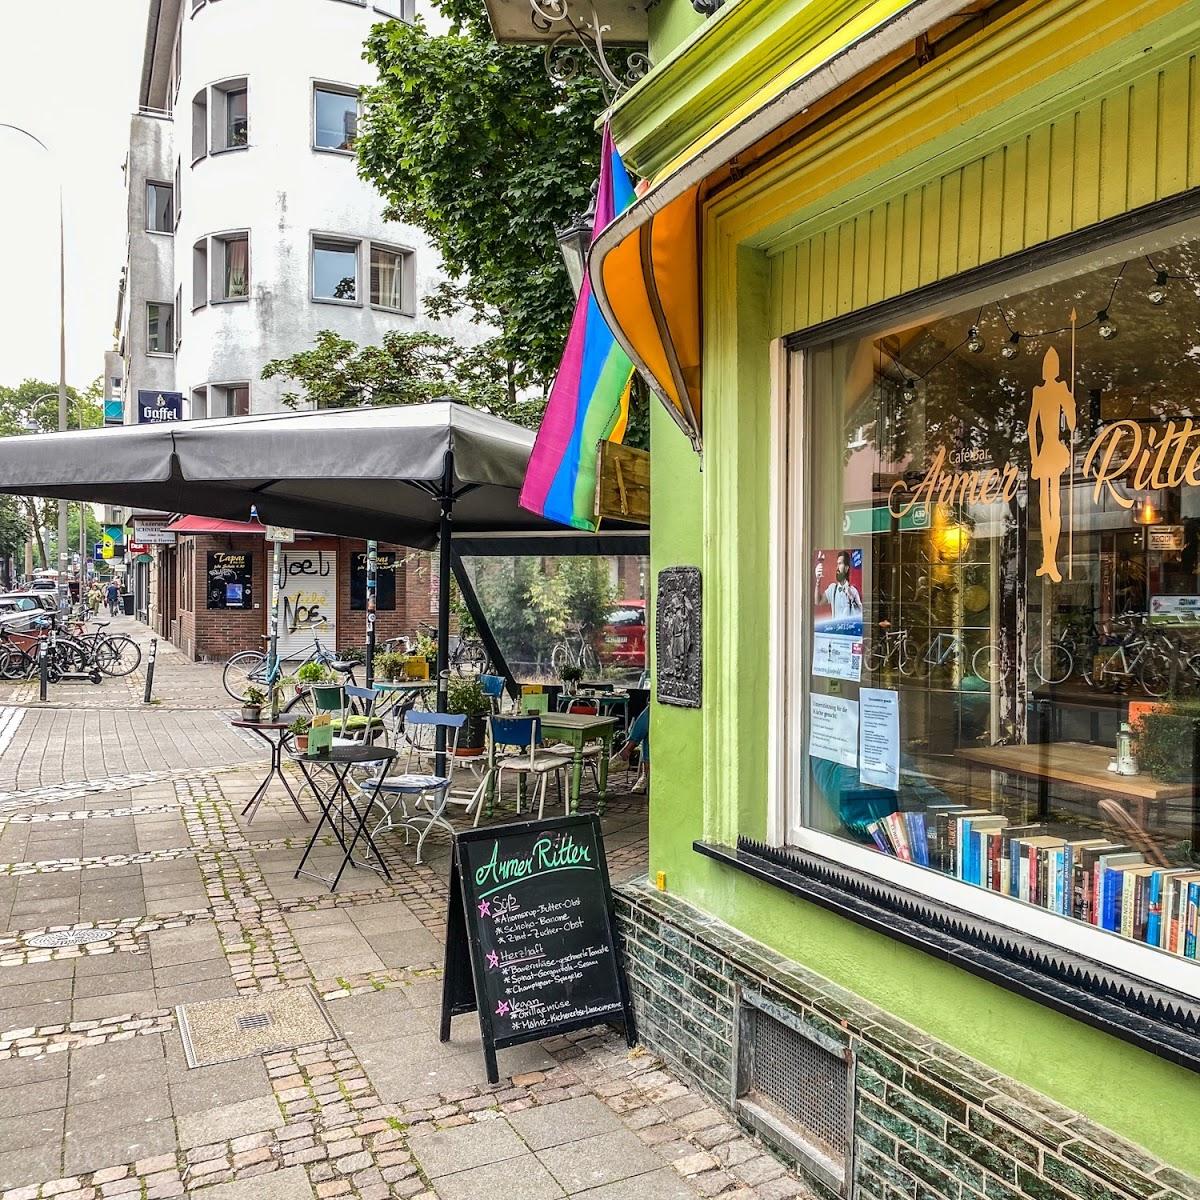 Restaurant "Cafe Bar Armer Ritter" in Köln